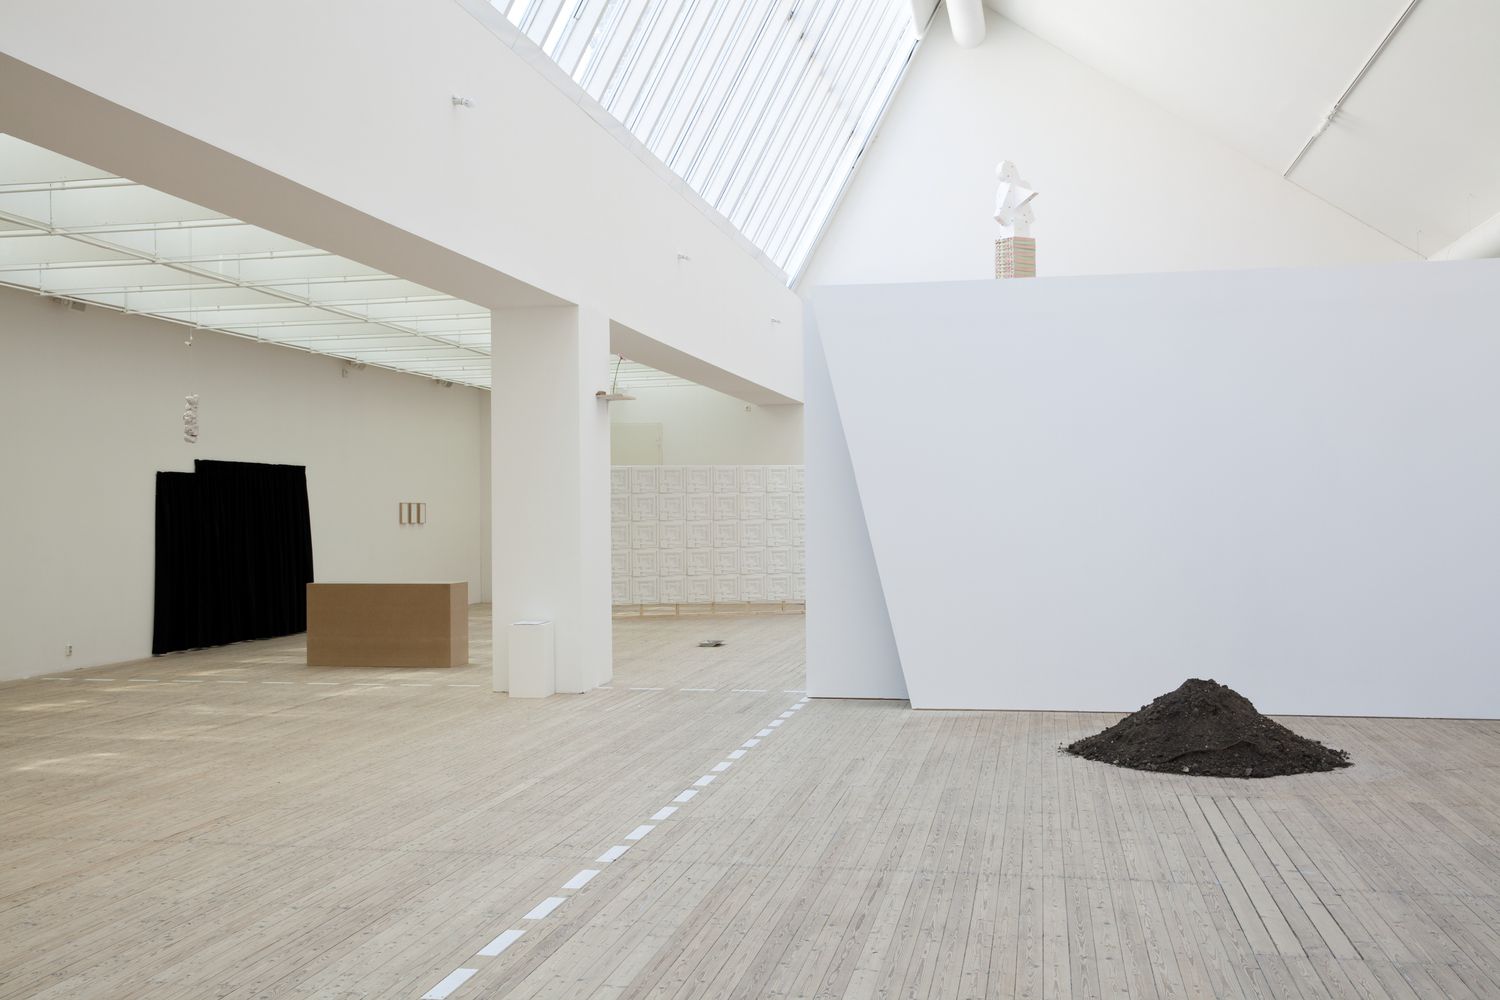 Index: The Swedish Contemporary Art Foundation